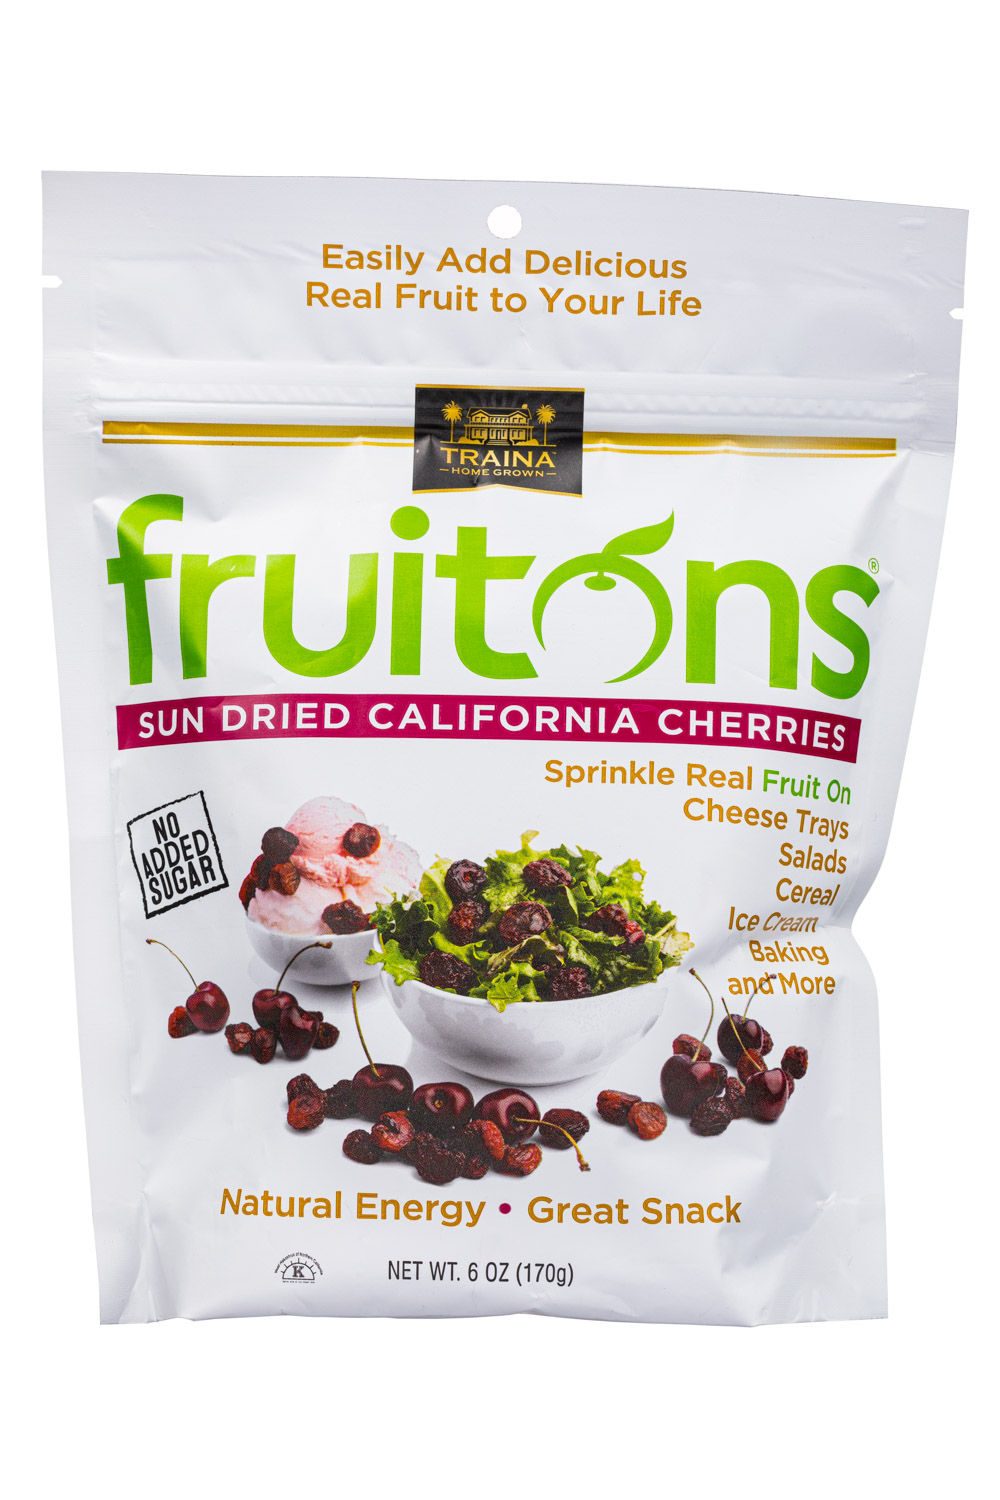 Sun Dried California Cherries 2019